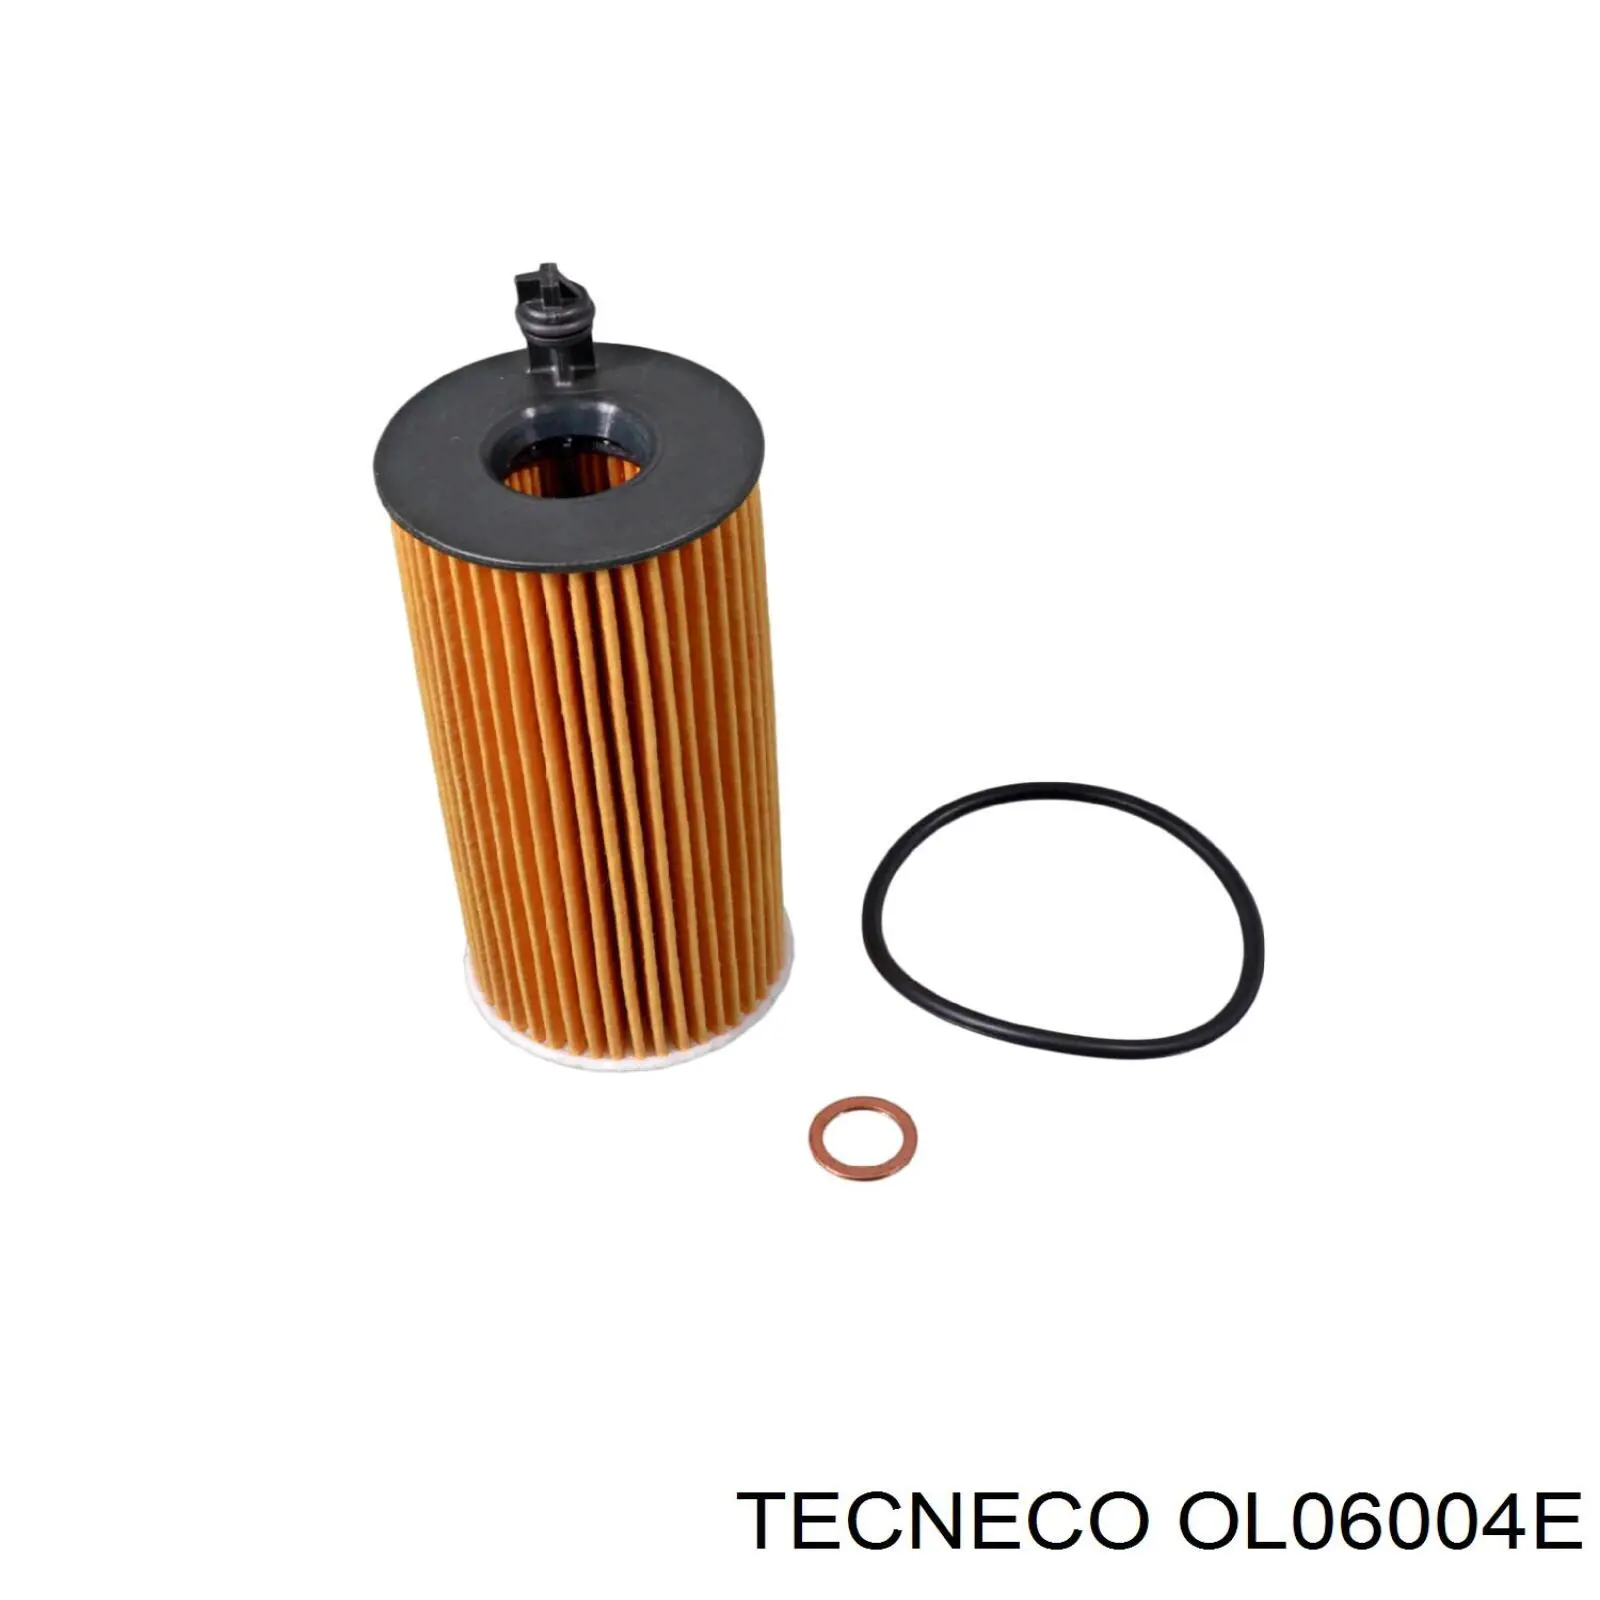 OL06004E Tecneco filtro de aceite